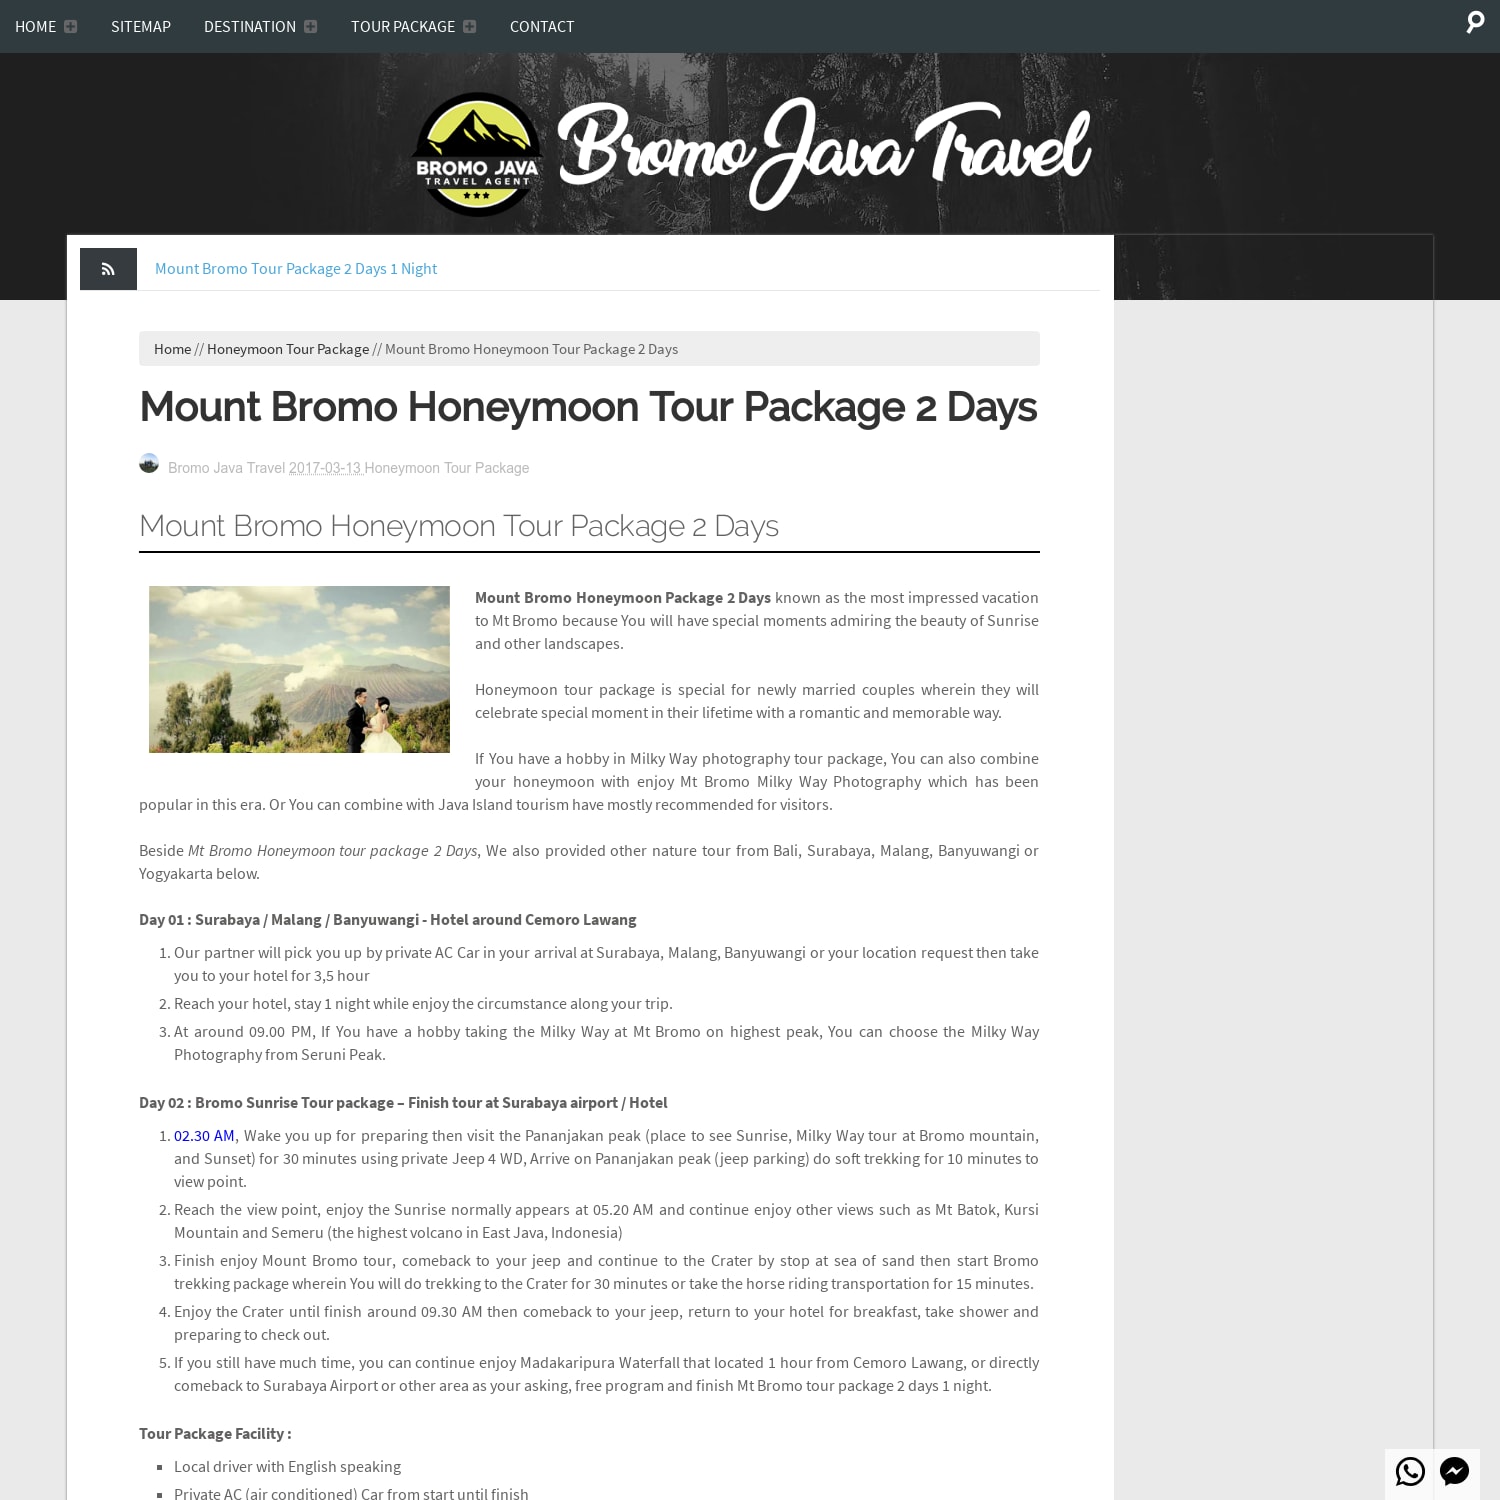 Mount Bromo Honeymoon Tour Package 2 Days